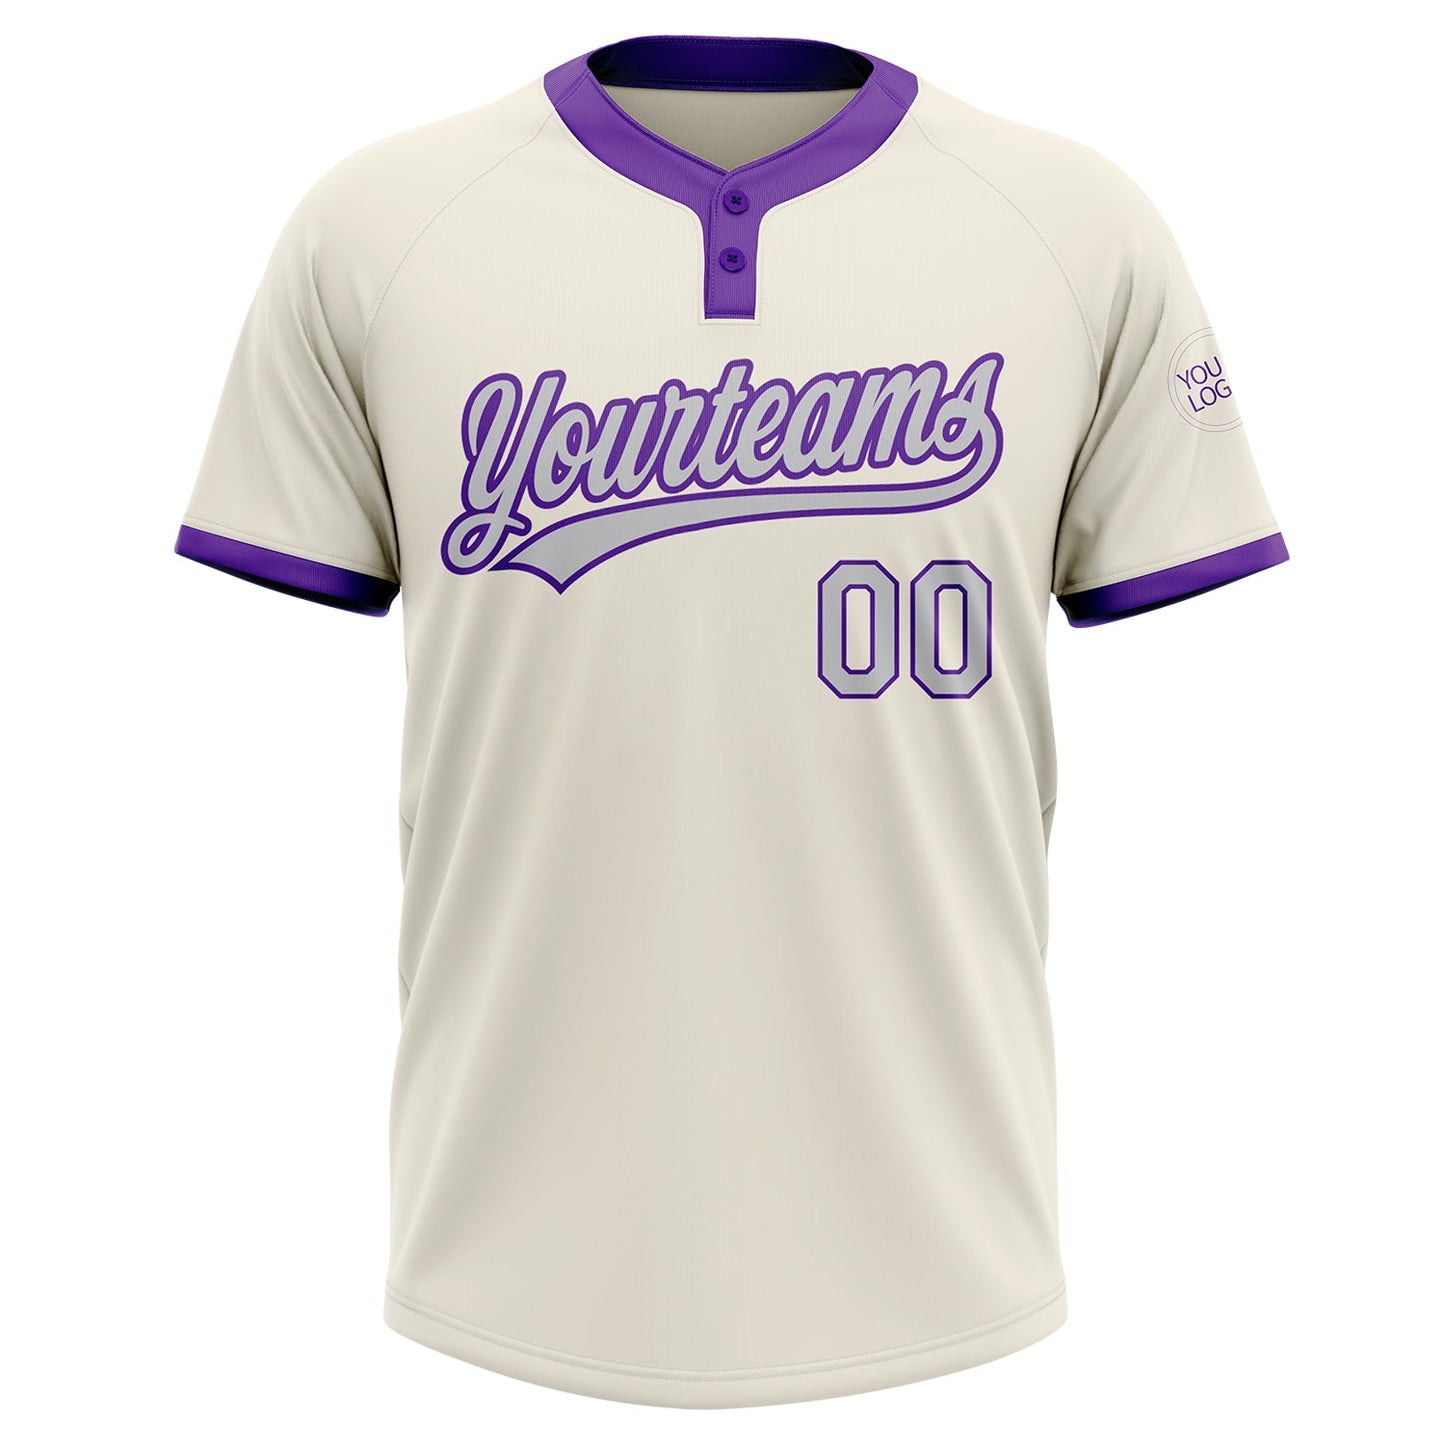 Custom Cream Gray-Purple Two-Button Unisex Softball Jersey